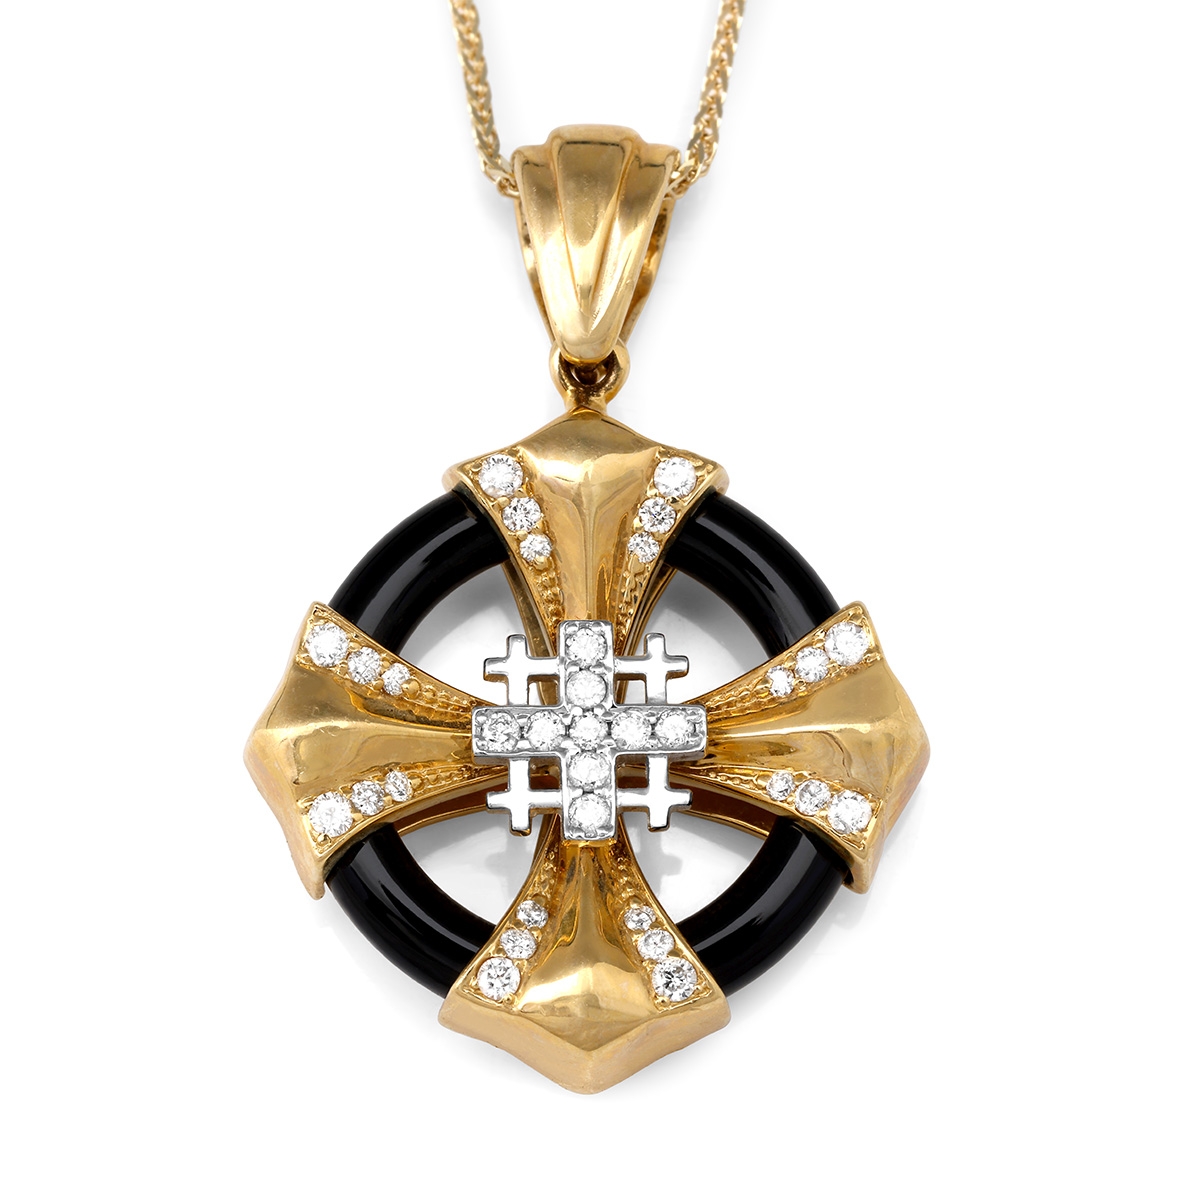 Anbinder Jewelry Round 14K Gold Jerusalem Cross Pendant with Diamonds and Onyx - Unisex - 1